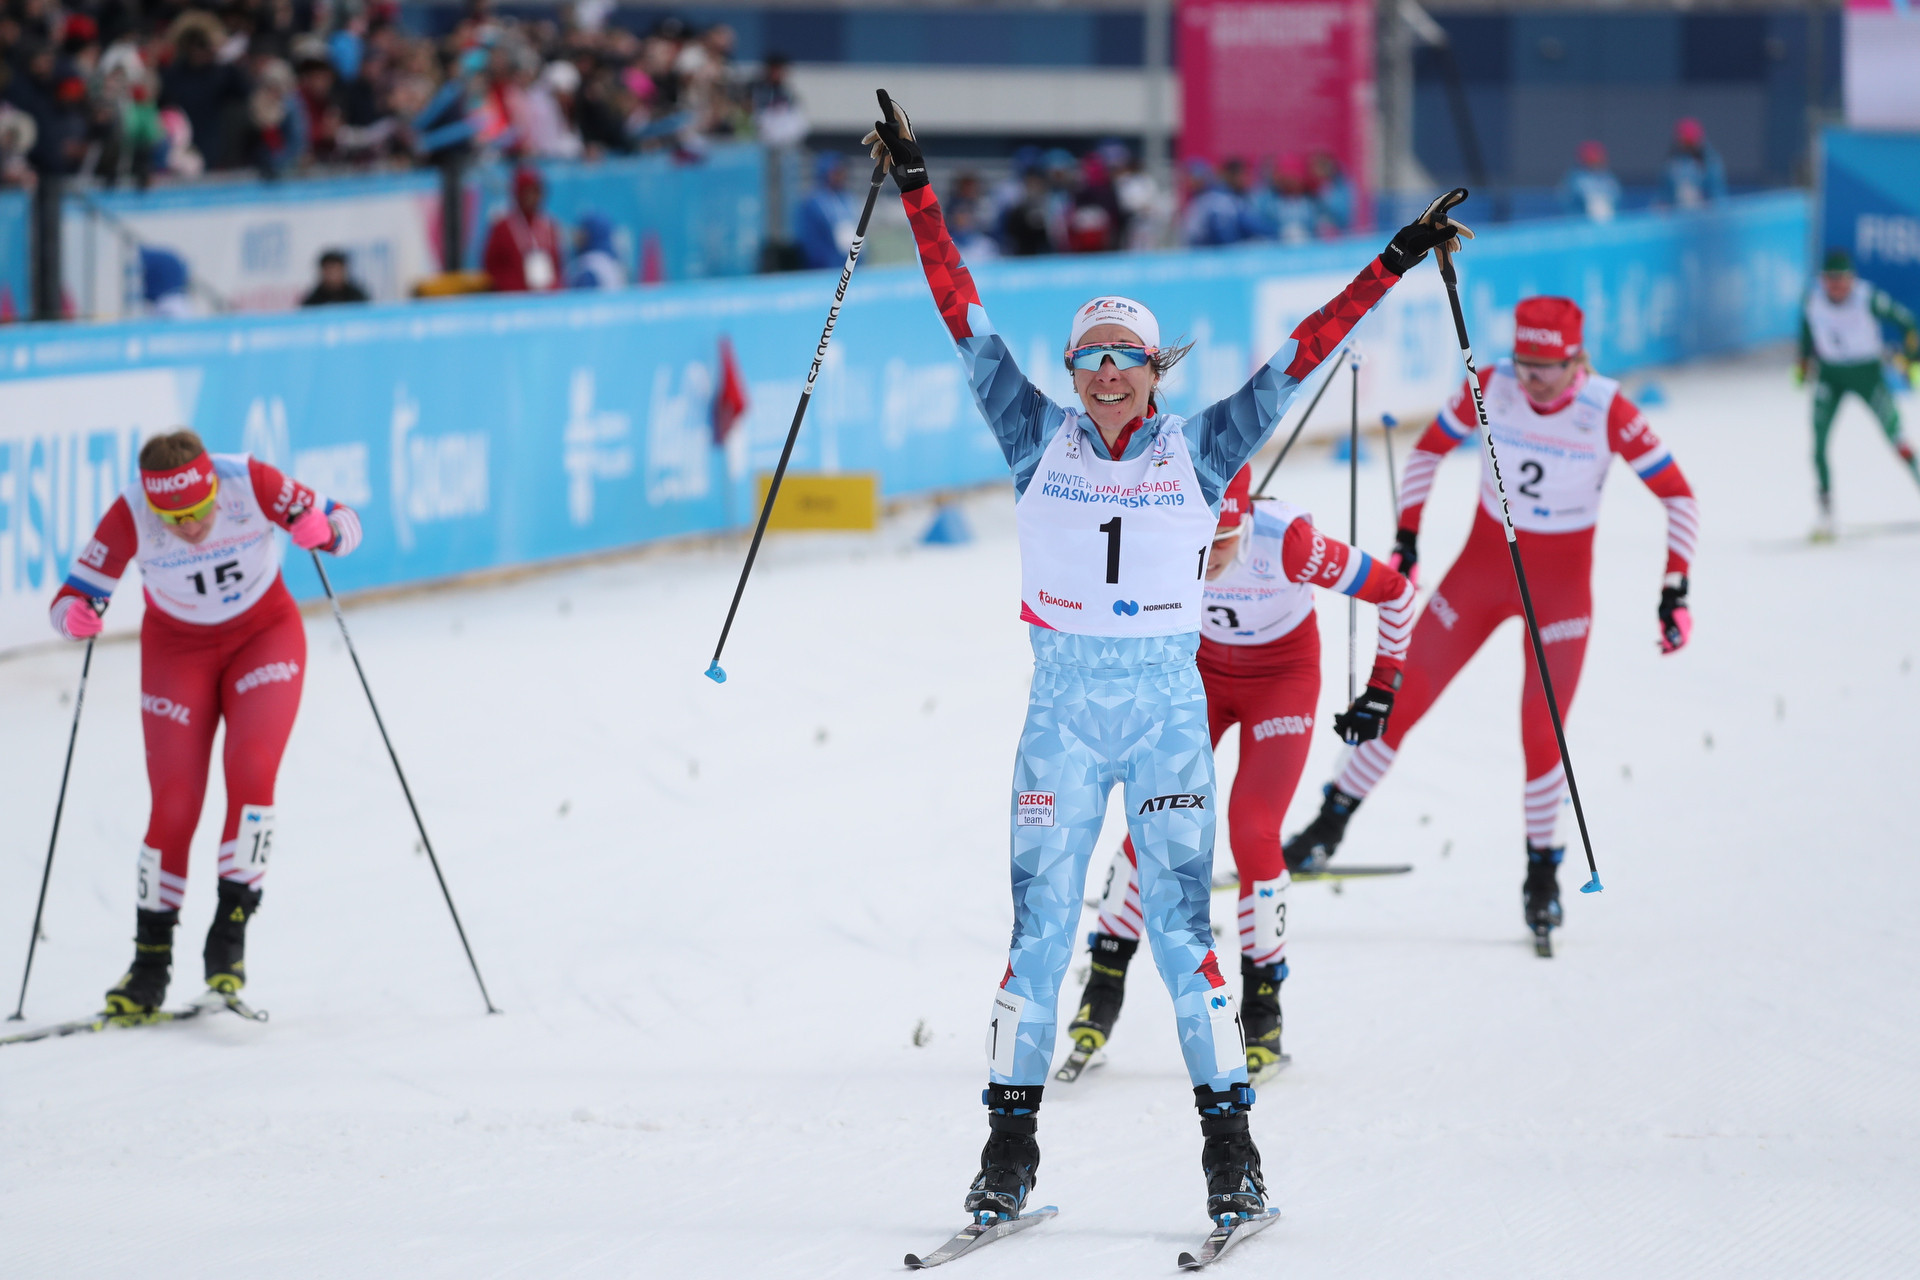 Czech skier Hyncicova ends Russian cross-country domination at Krasnoyarsk 2019 Winter Universiade